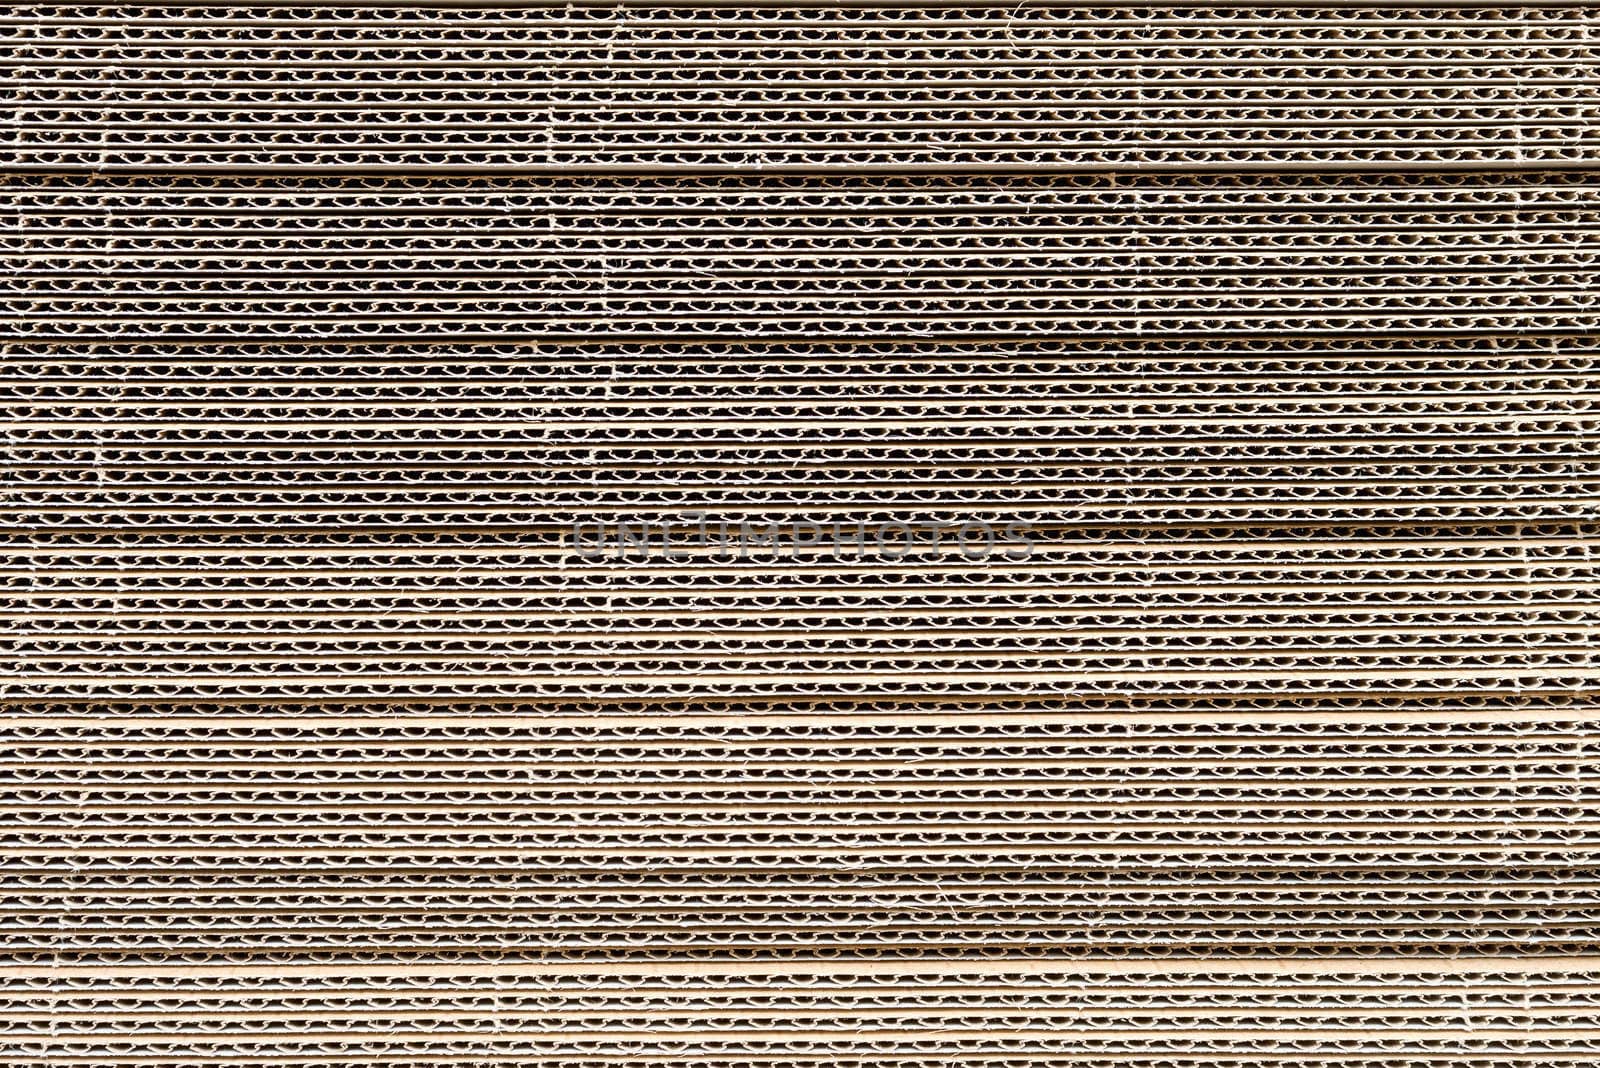 Corrugated cardboard texture by DNKSTUDIO